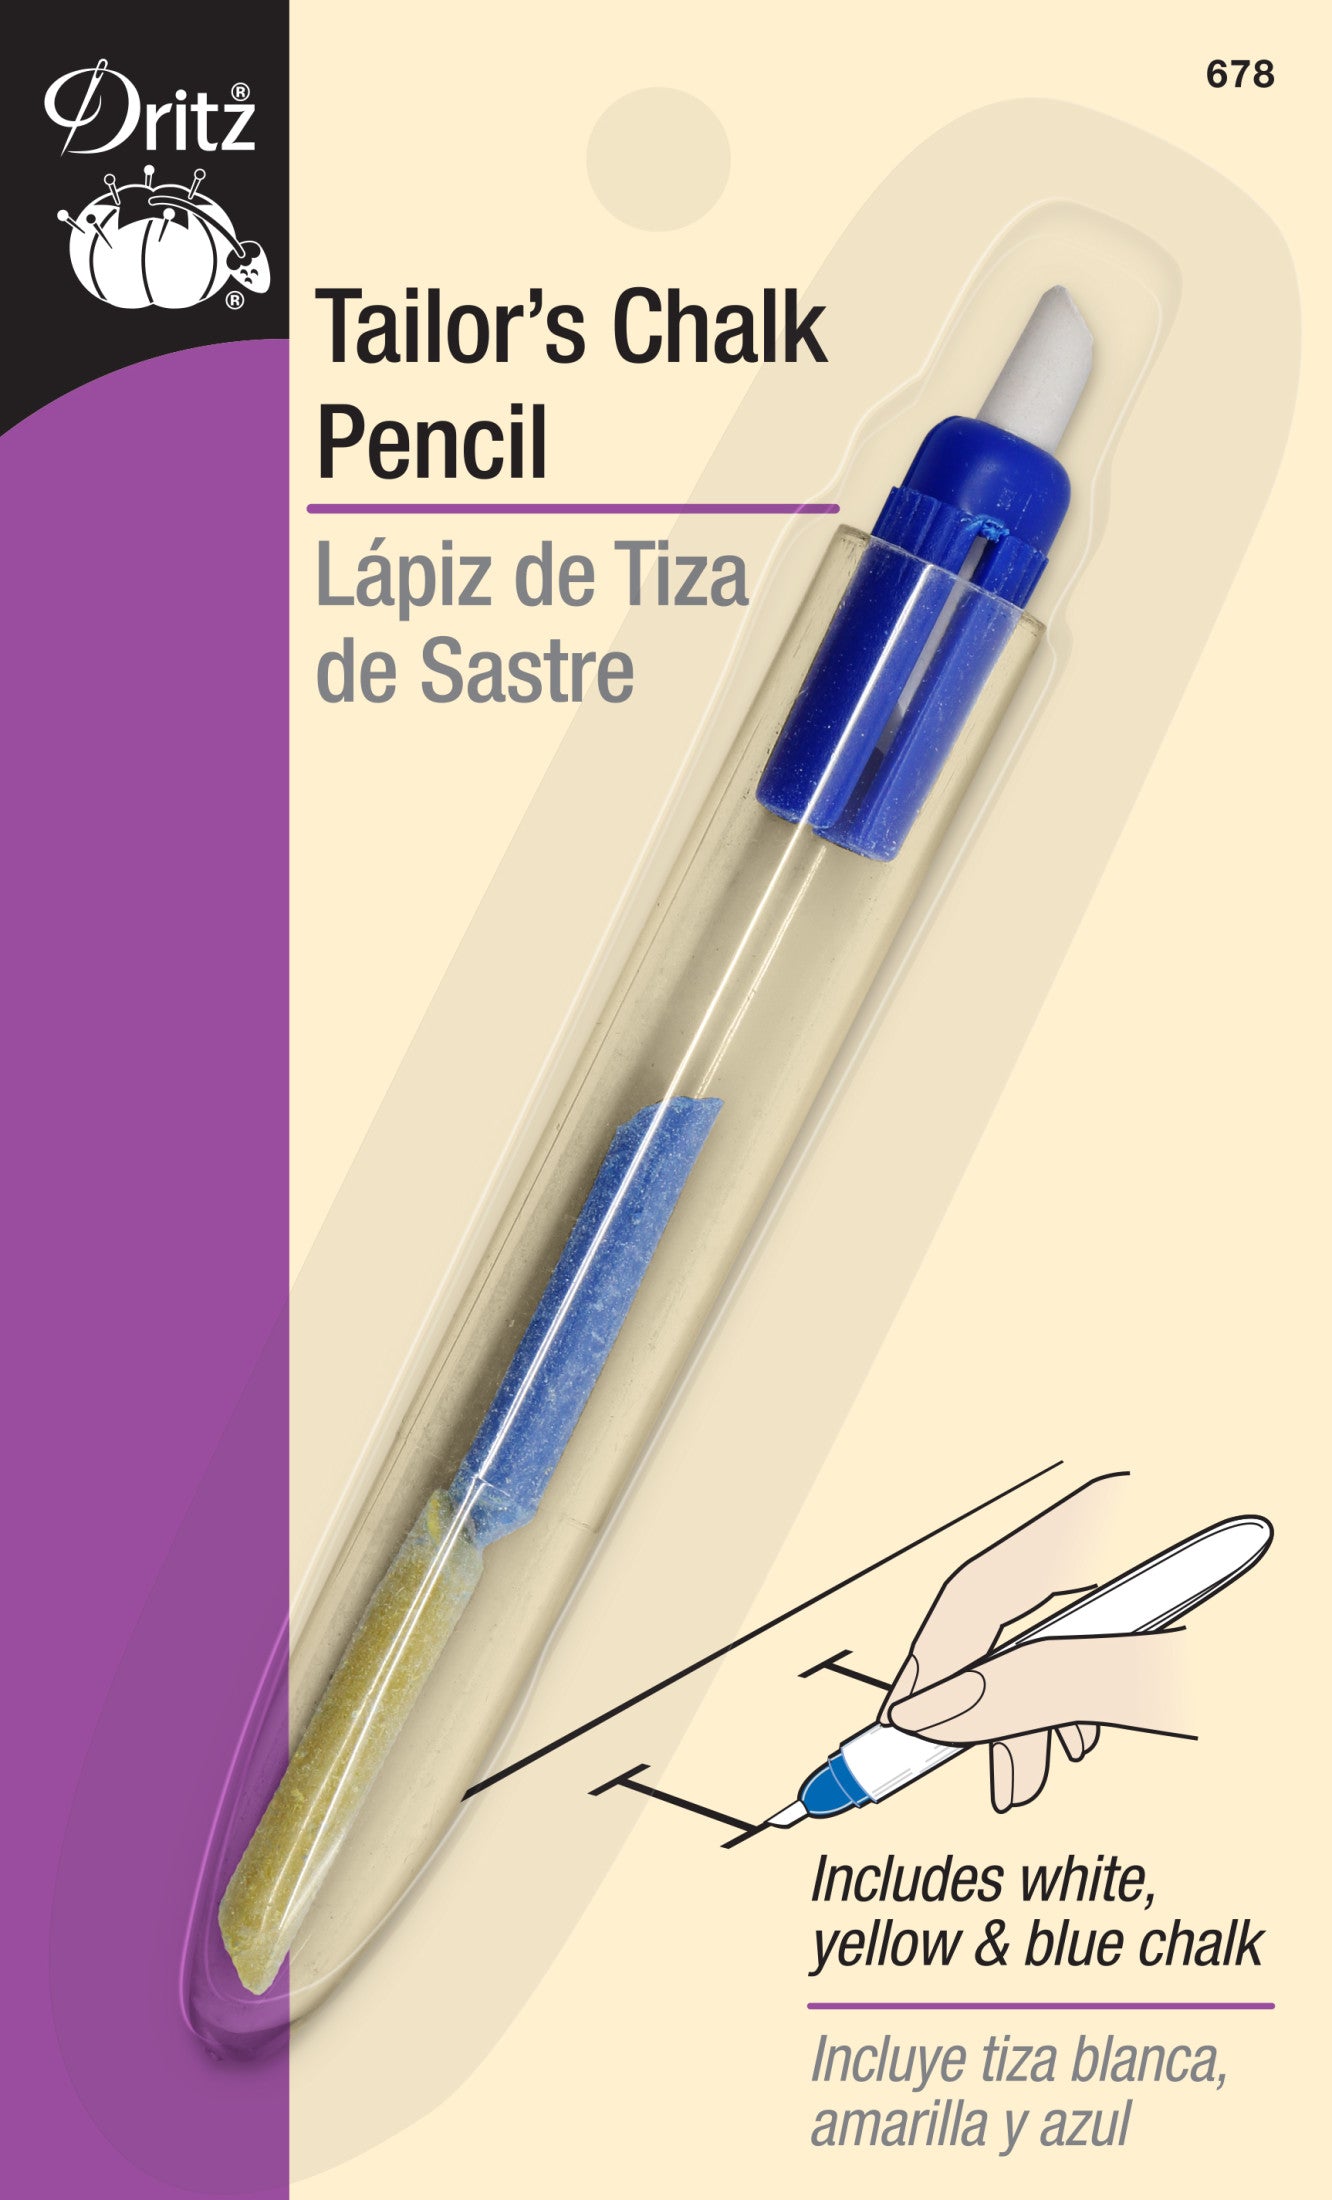 Dritz Tailor's Chalk Pencil (Blue, Yellow & White Chalk)